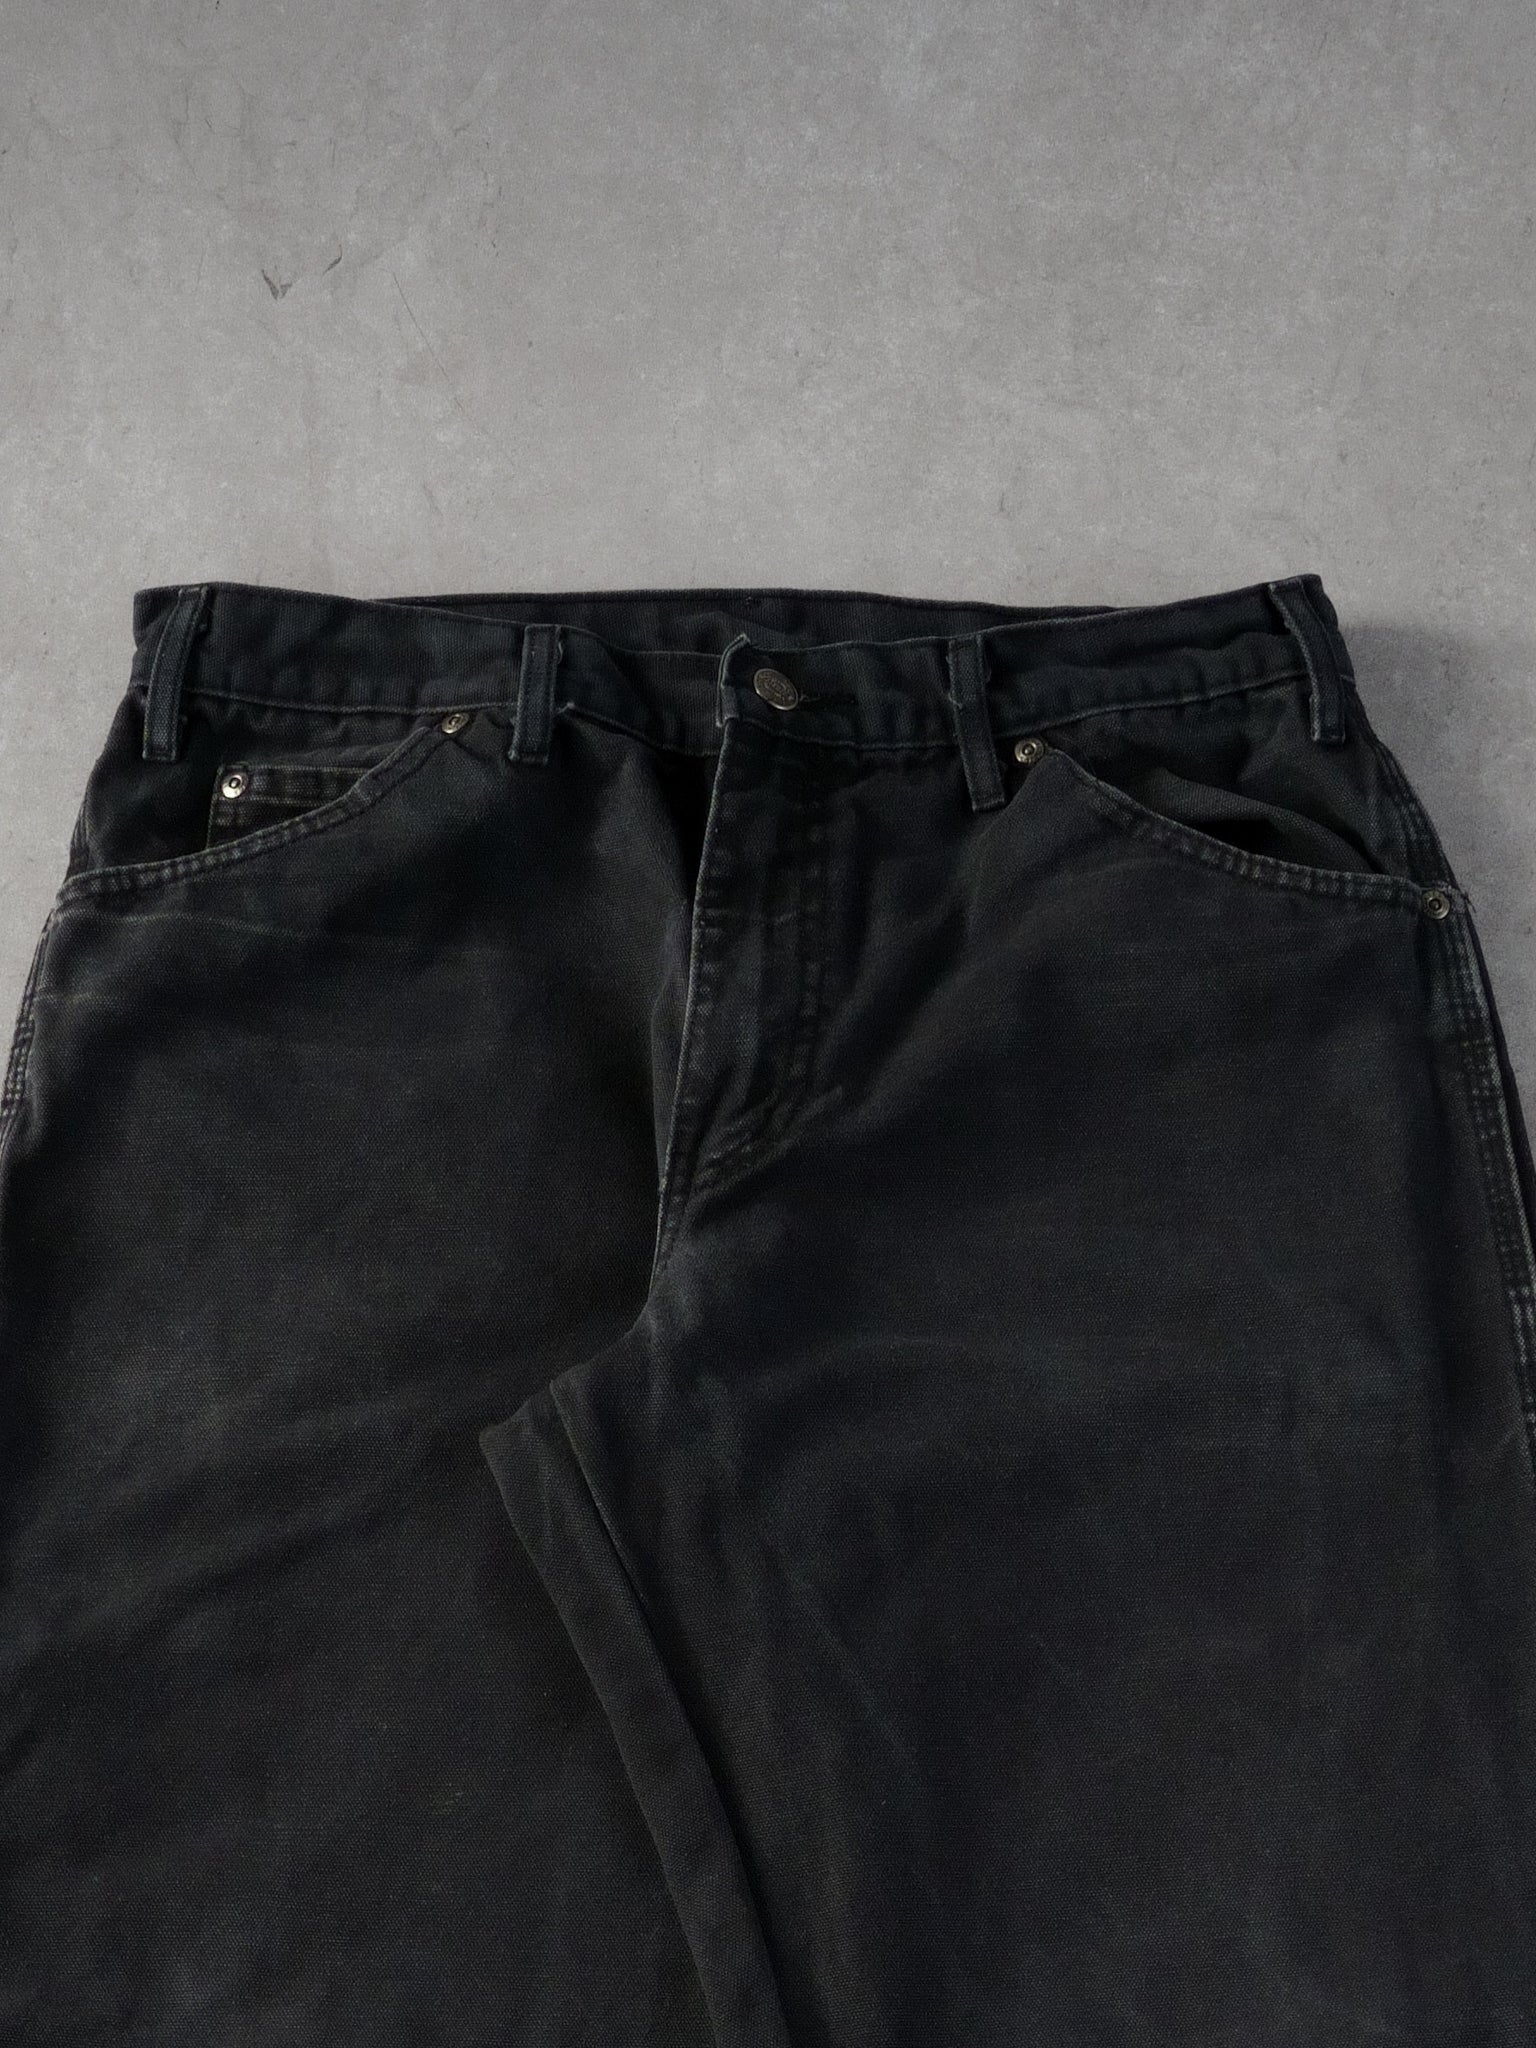 Vintage 90s Washed Black Dickies Carpenter Pants (32x33)